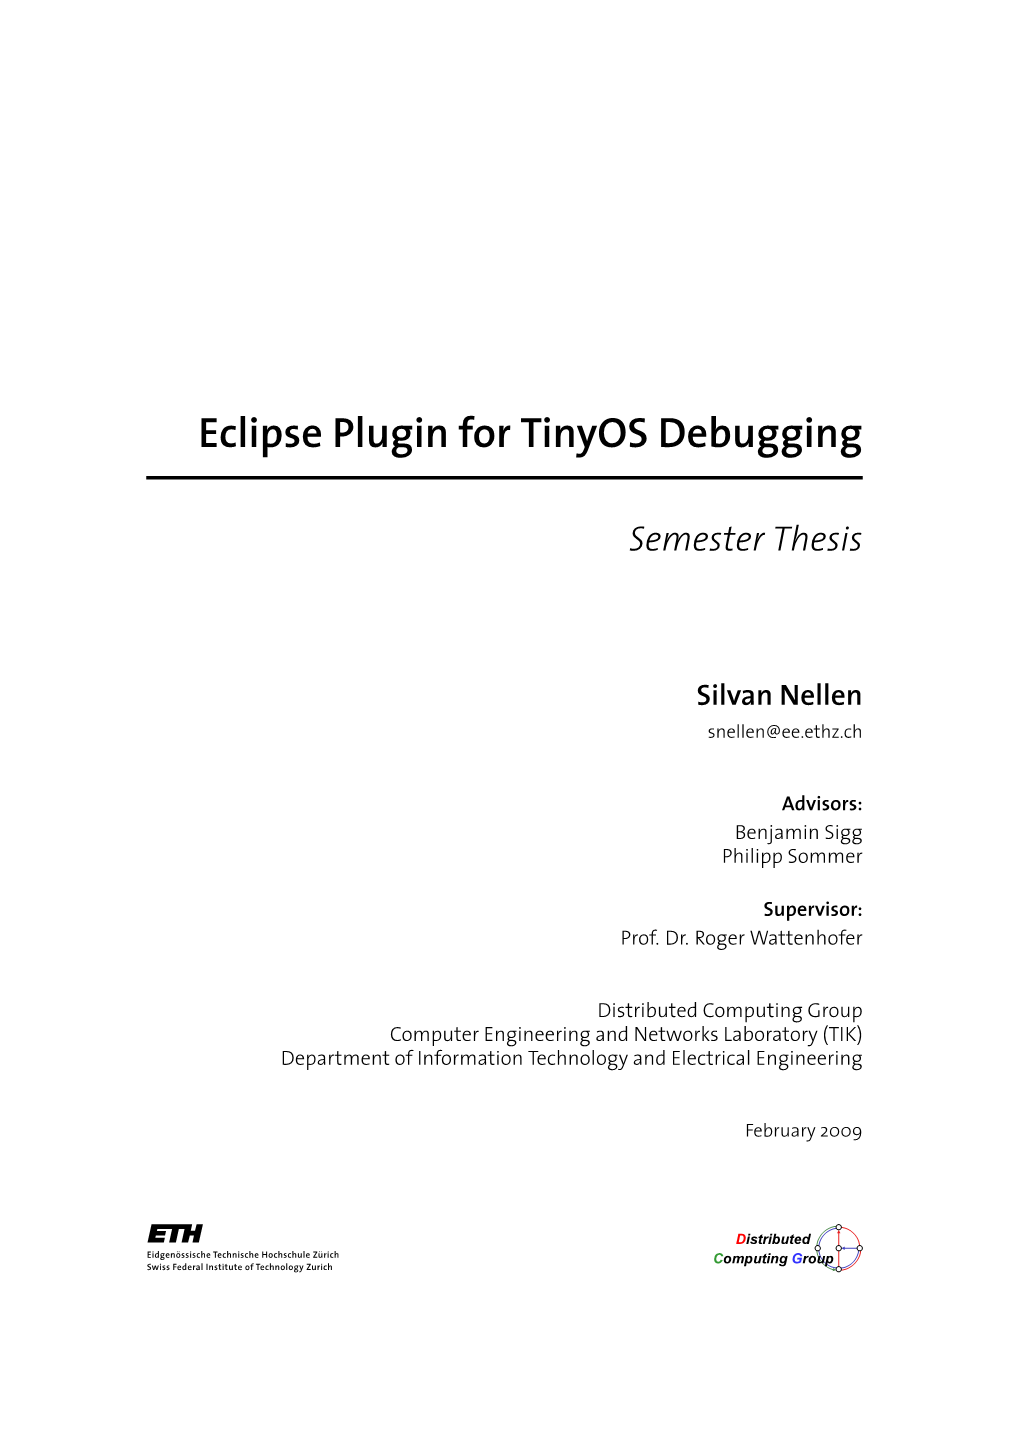 Eclipse Debug Plugin for Tinyos